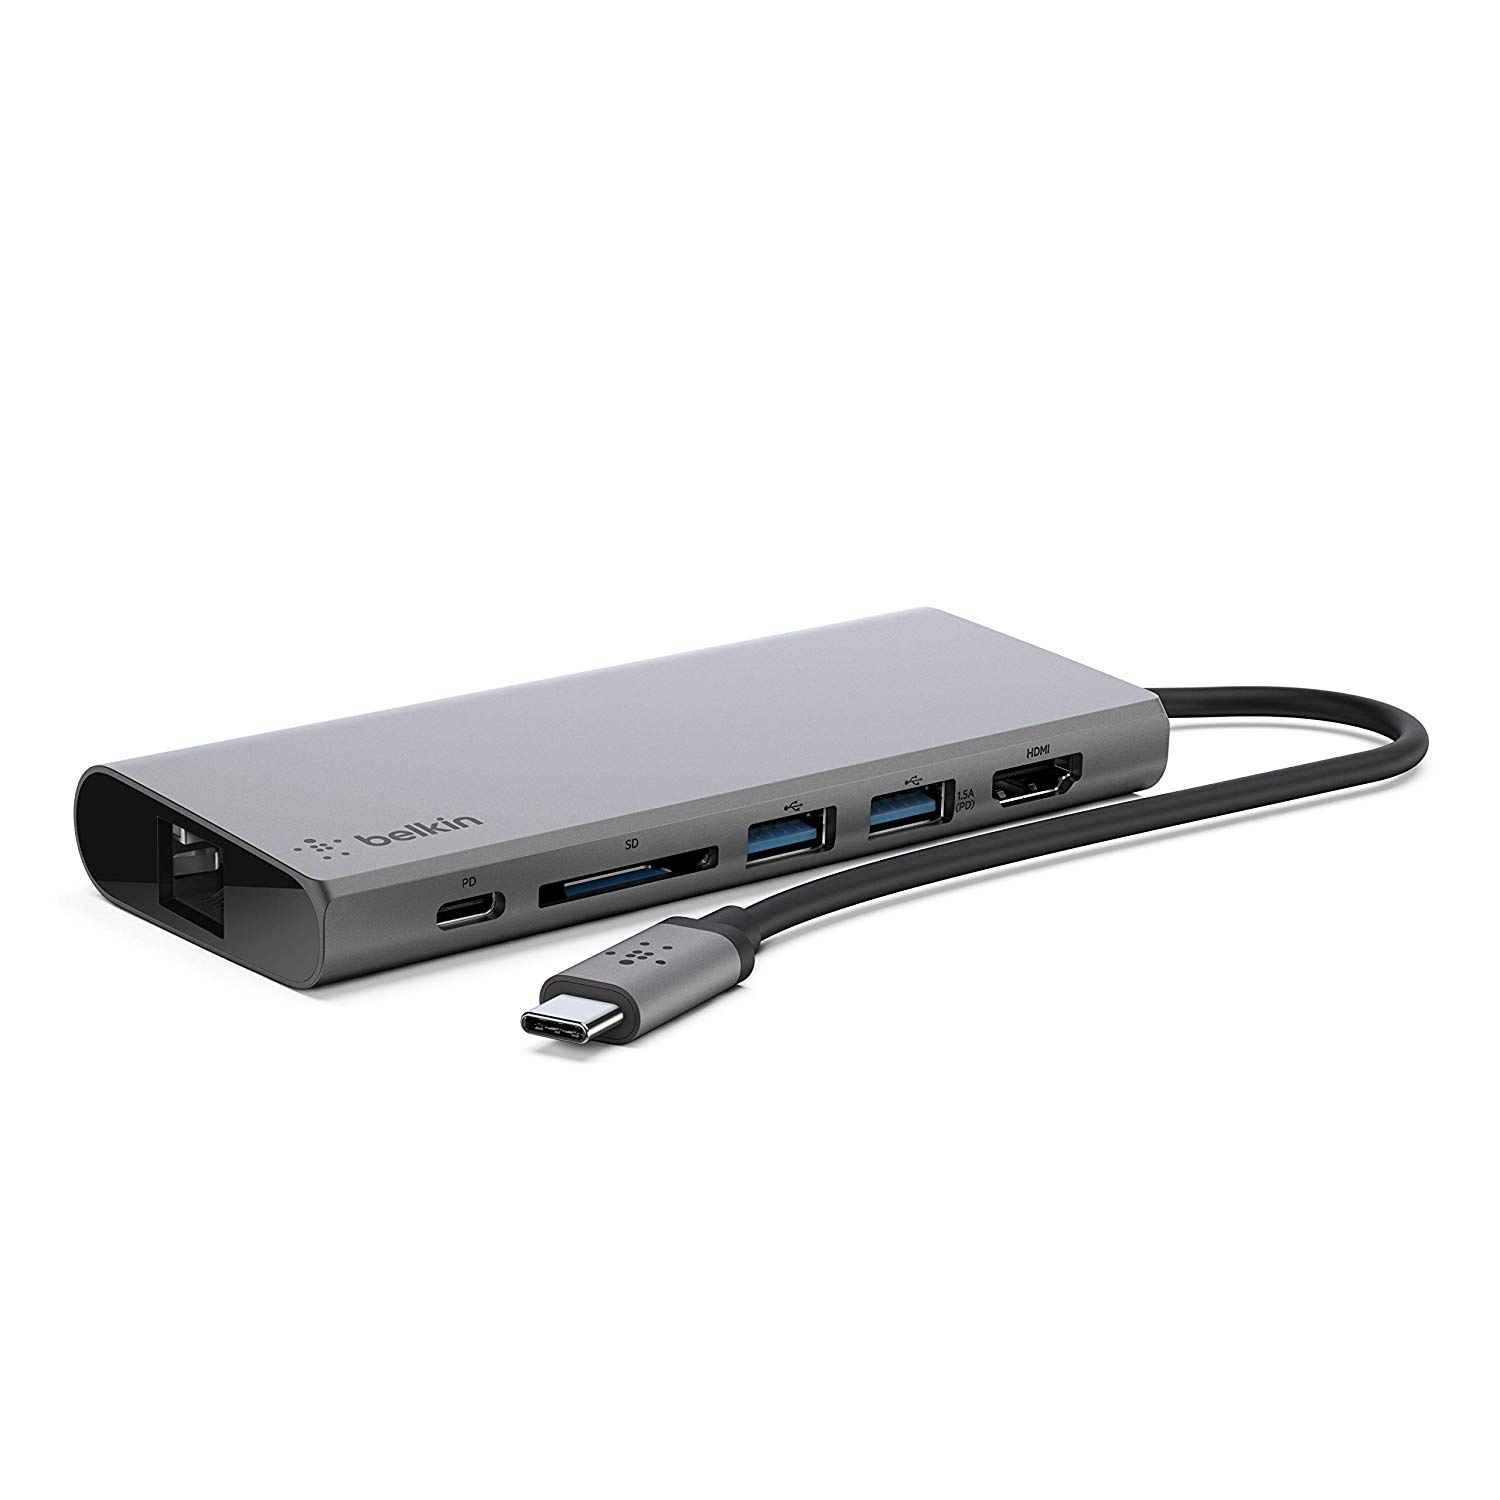 Belkin、手の平サイズの万能USB-Cマルチハブ｢USB-C マルチメディアハブ｣を5月31日に発売へ